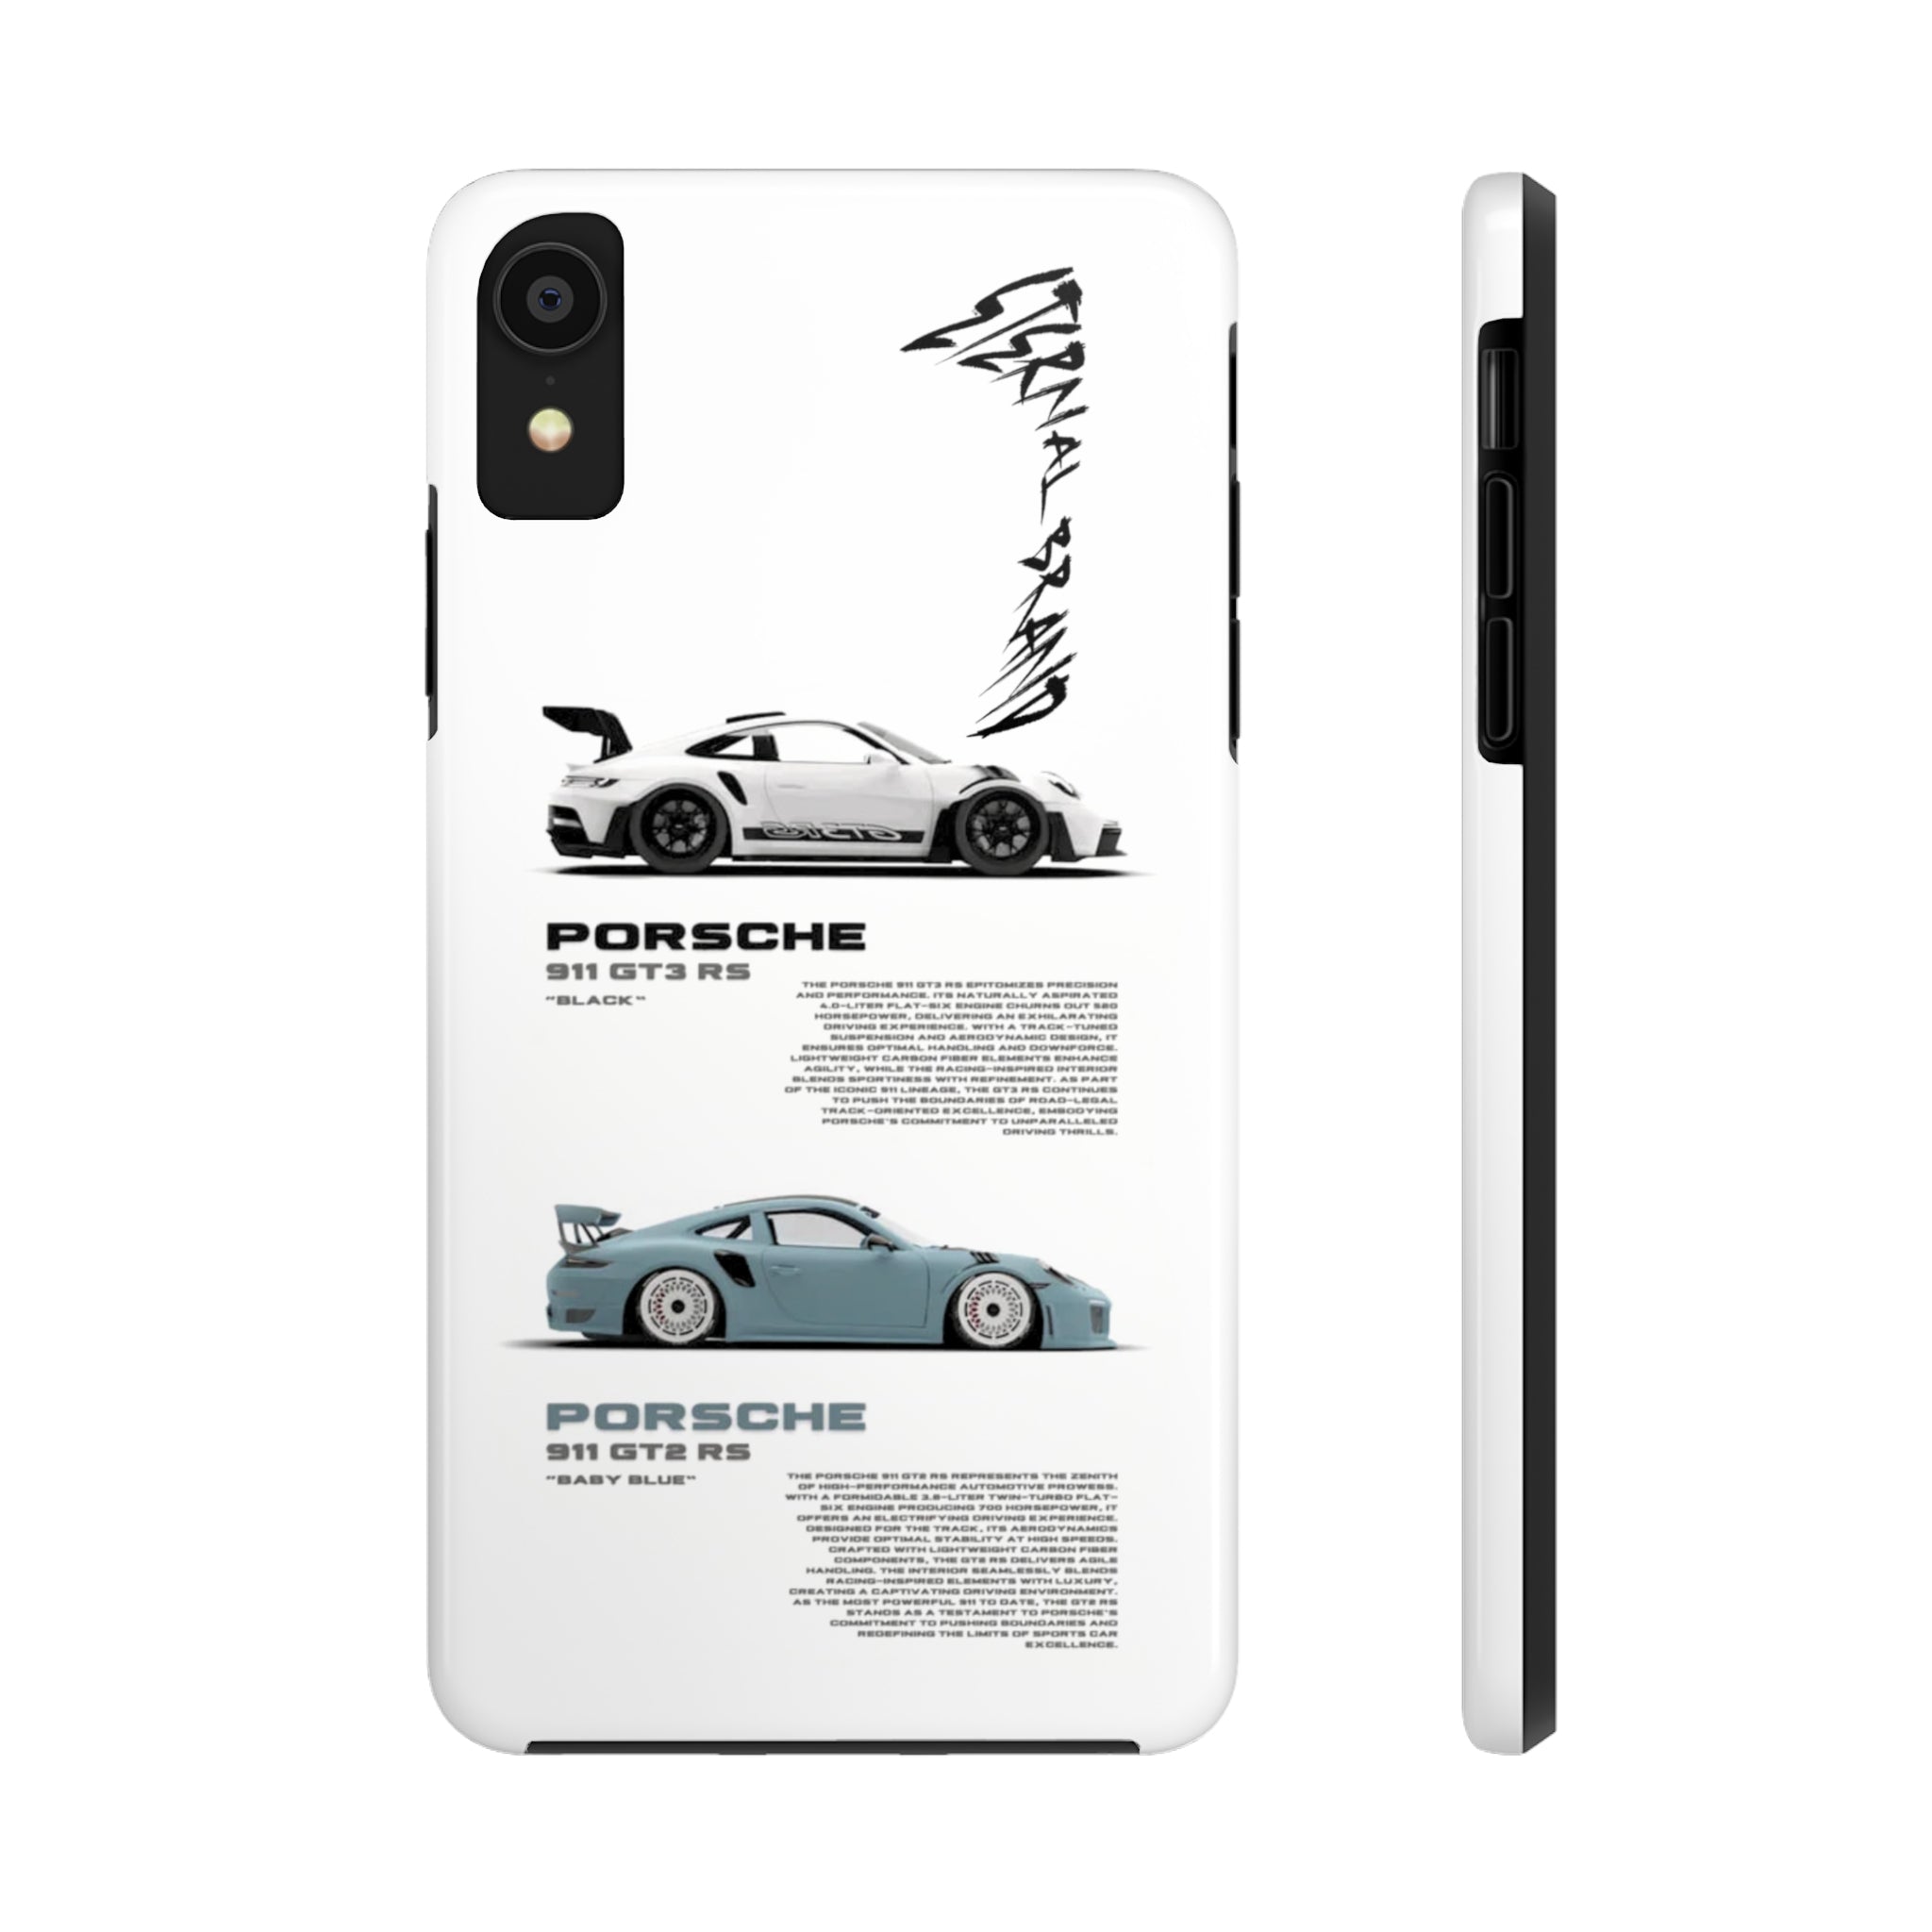 Porsche GT3 RS "Duo"